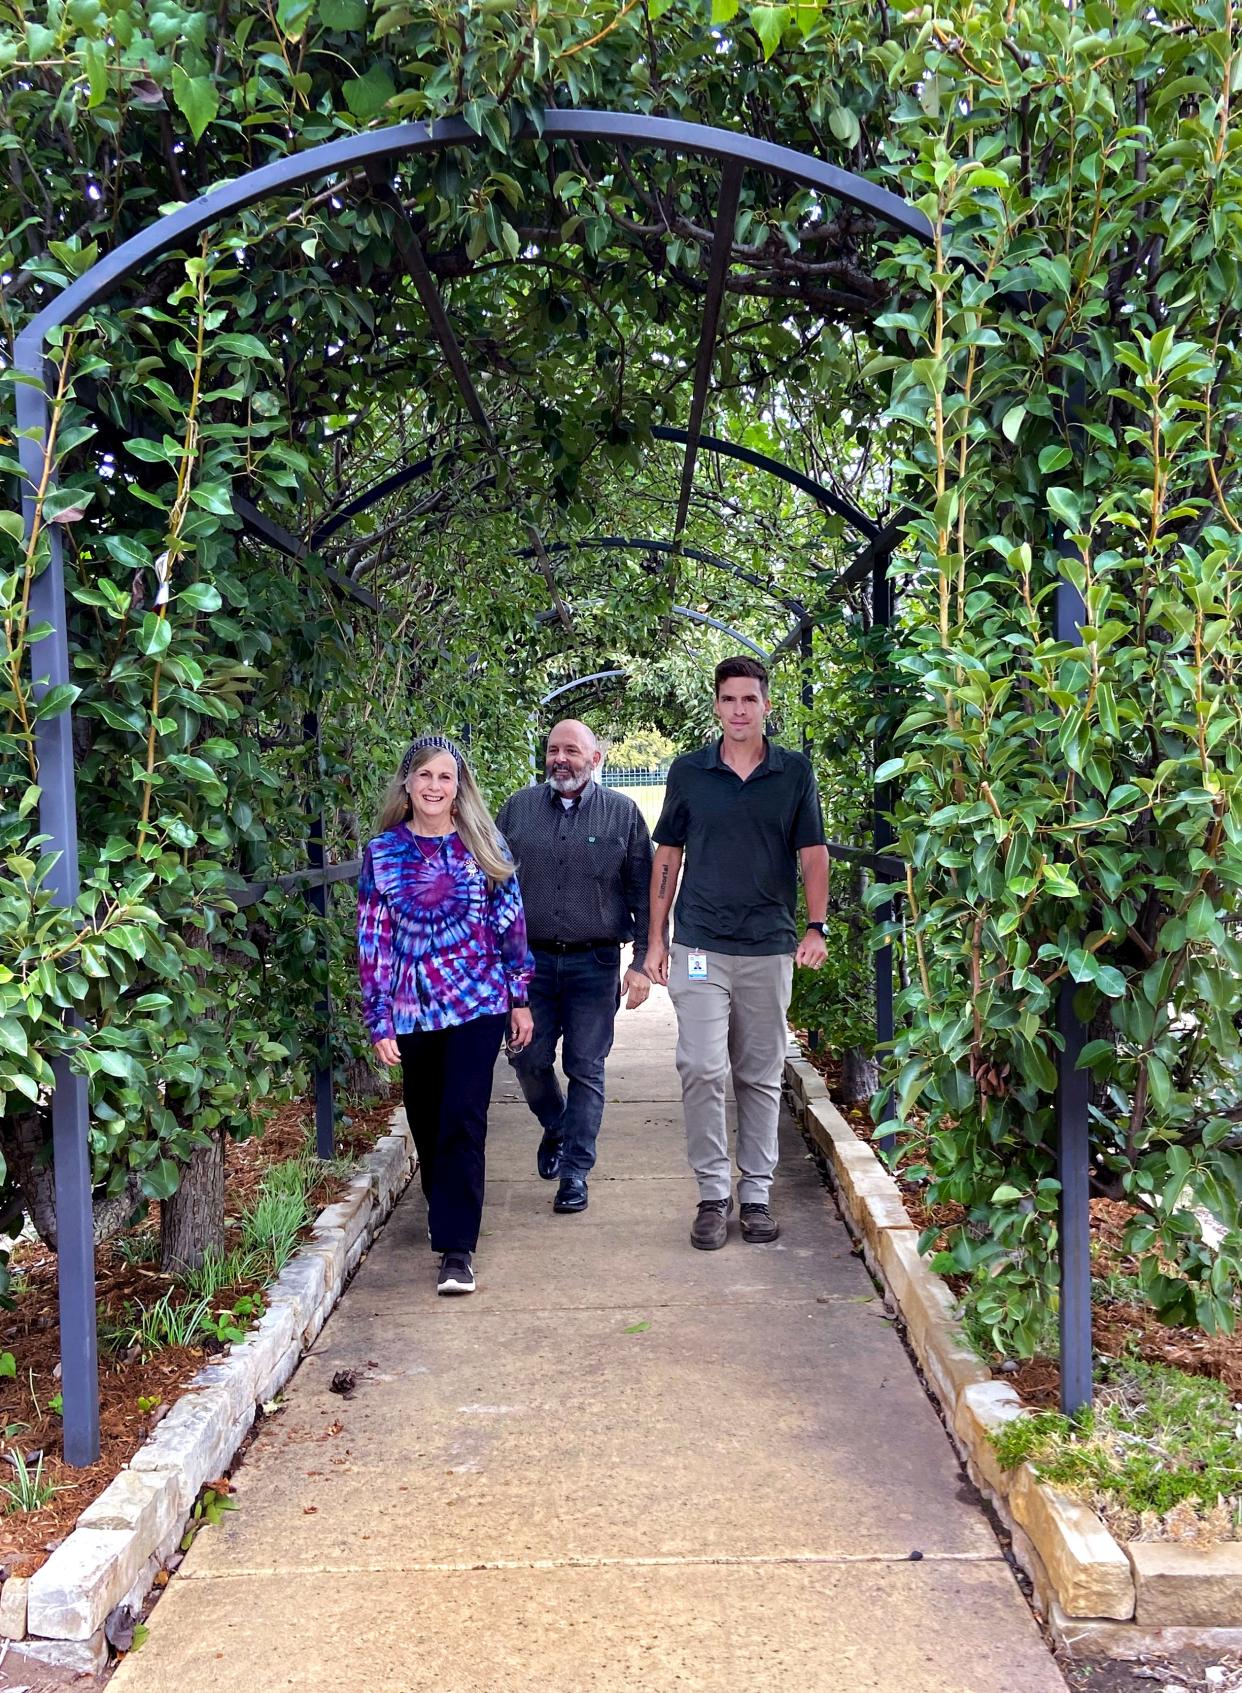 Jordan Davis, Pam Patty and Steve Petty walk under a trellis at the Lynn Institute Community Garden at Chesapeake, NW 62 and N Shartel Ave.